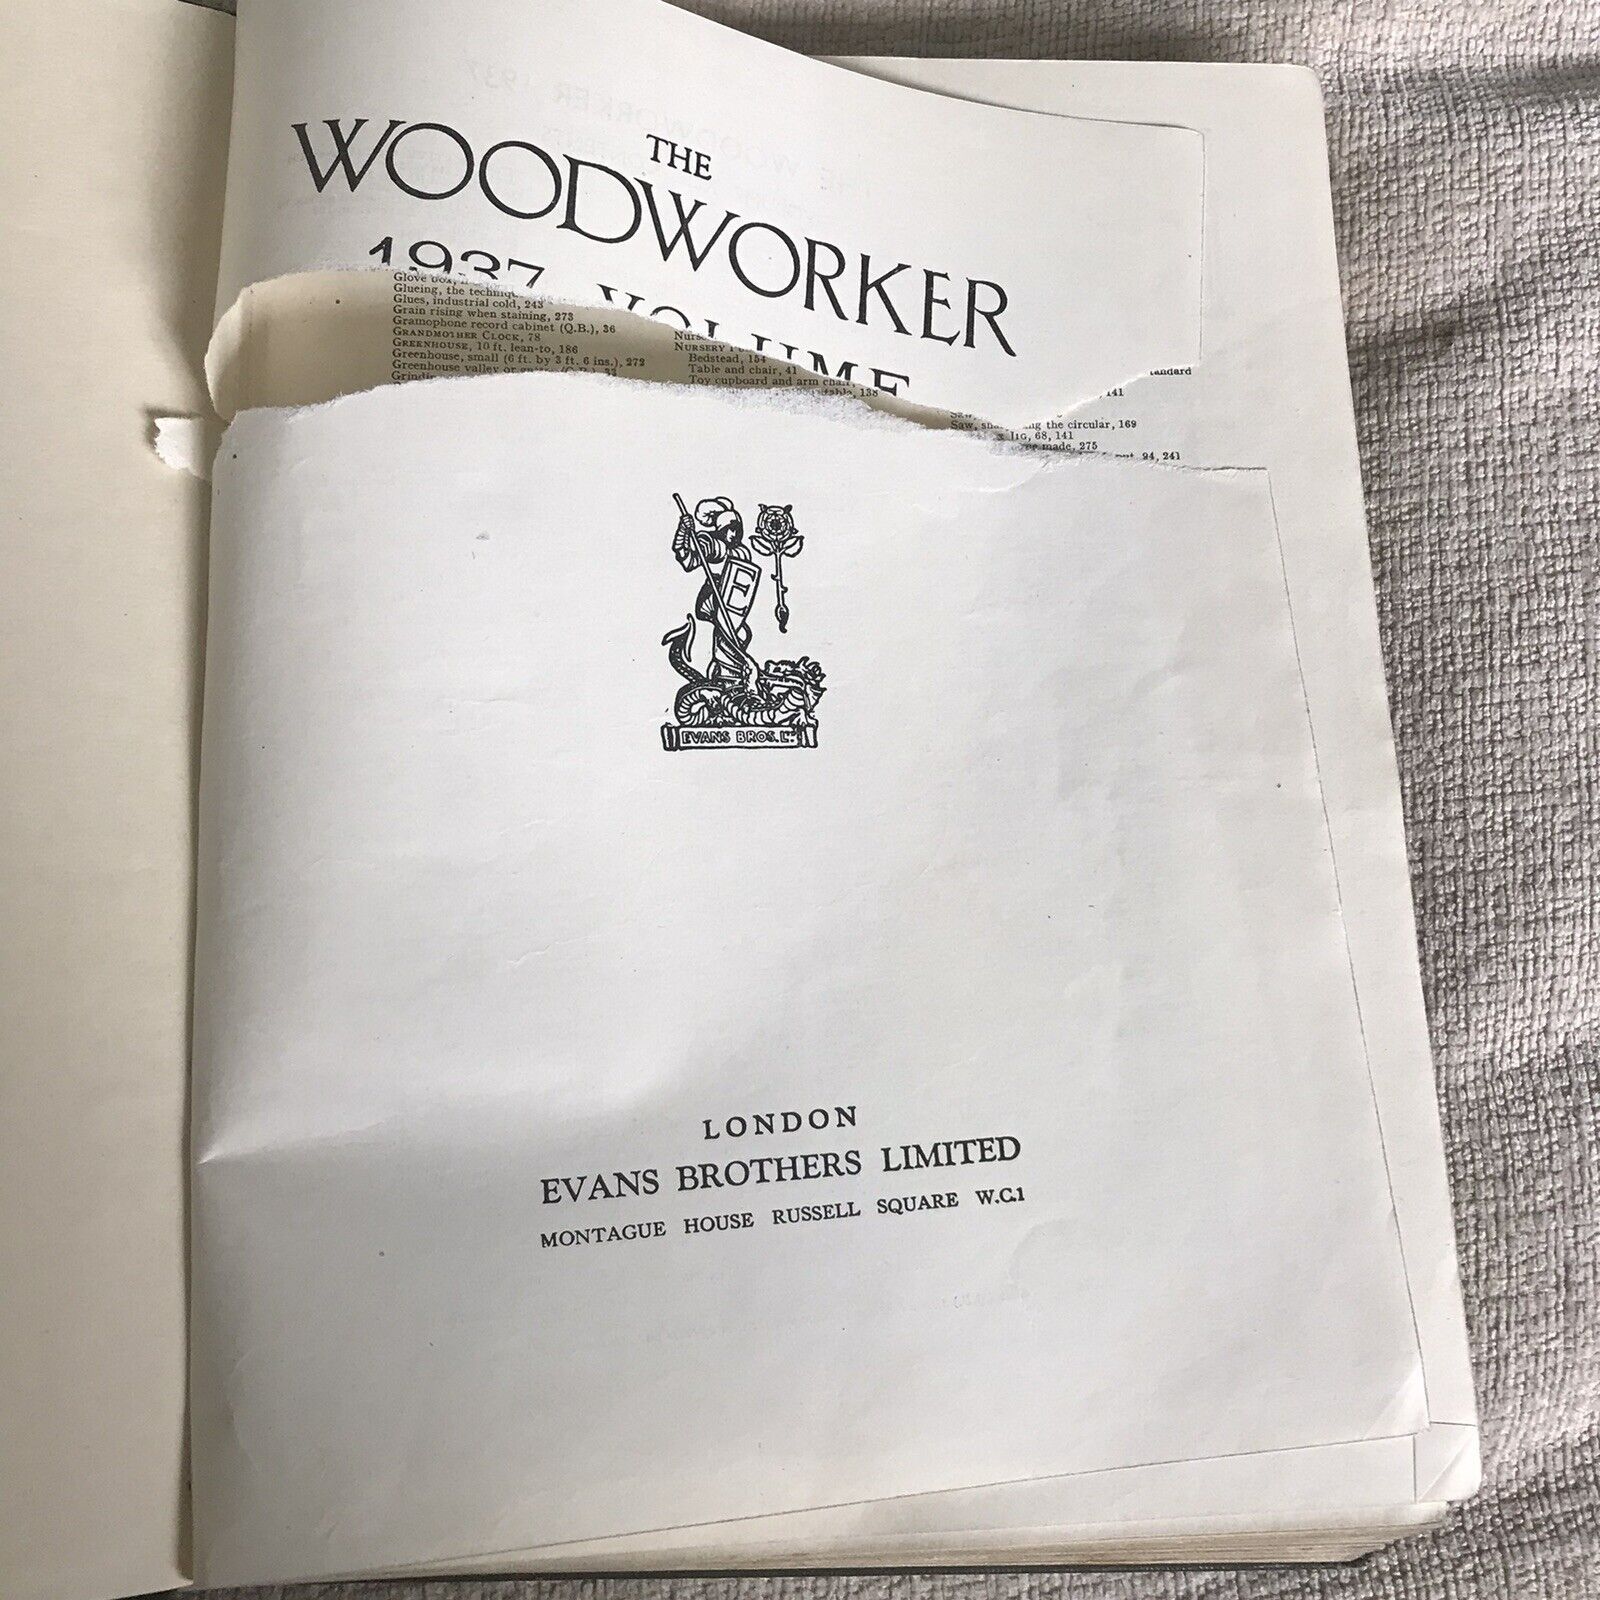 1937 The Woodworker Pub Evan’s Bros Ltd Honeyburn Books (UK)